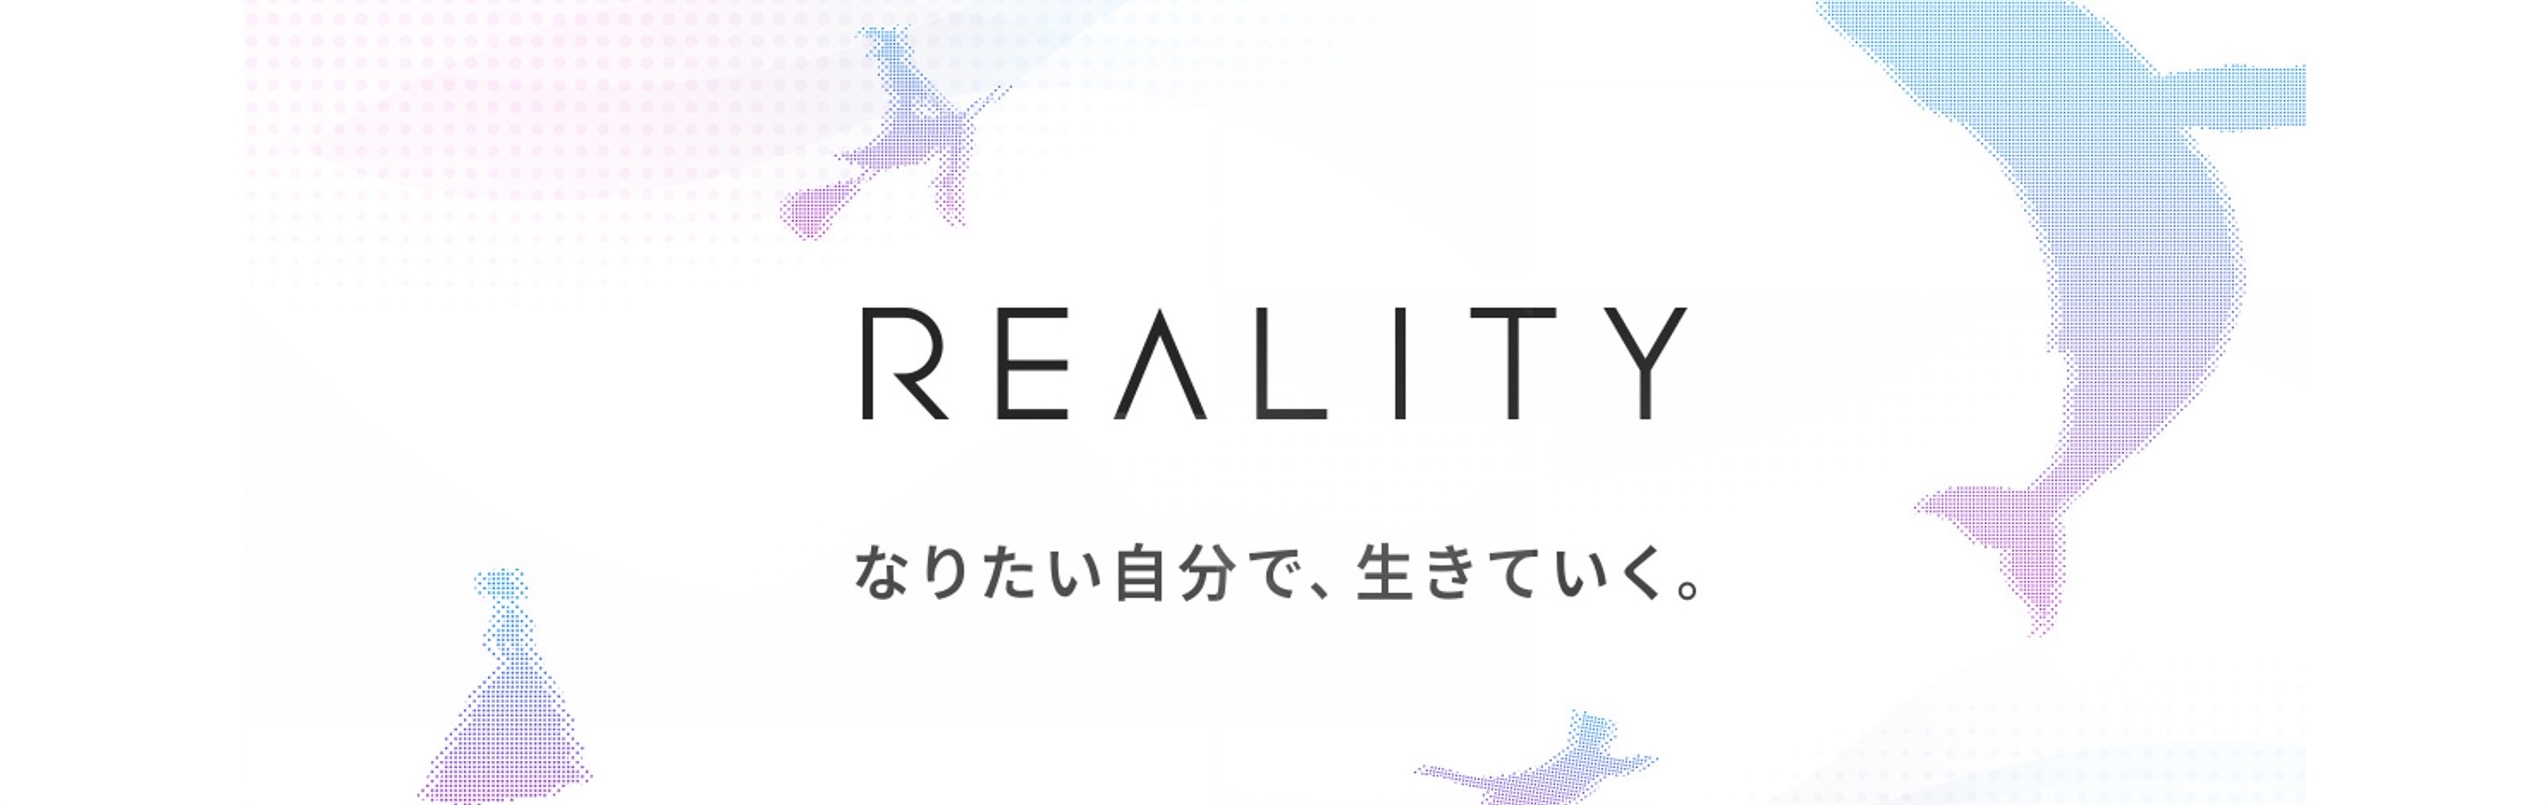 REALITY株式会社の求人情報-03